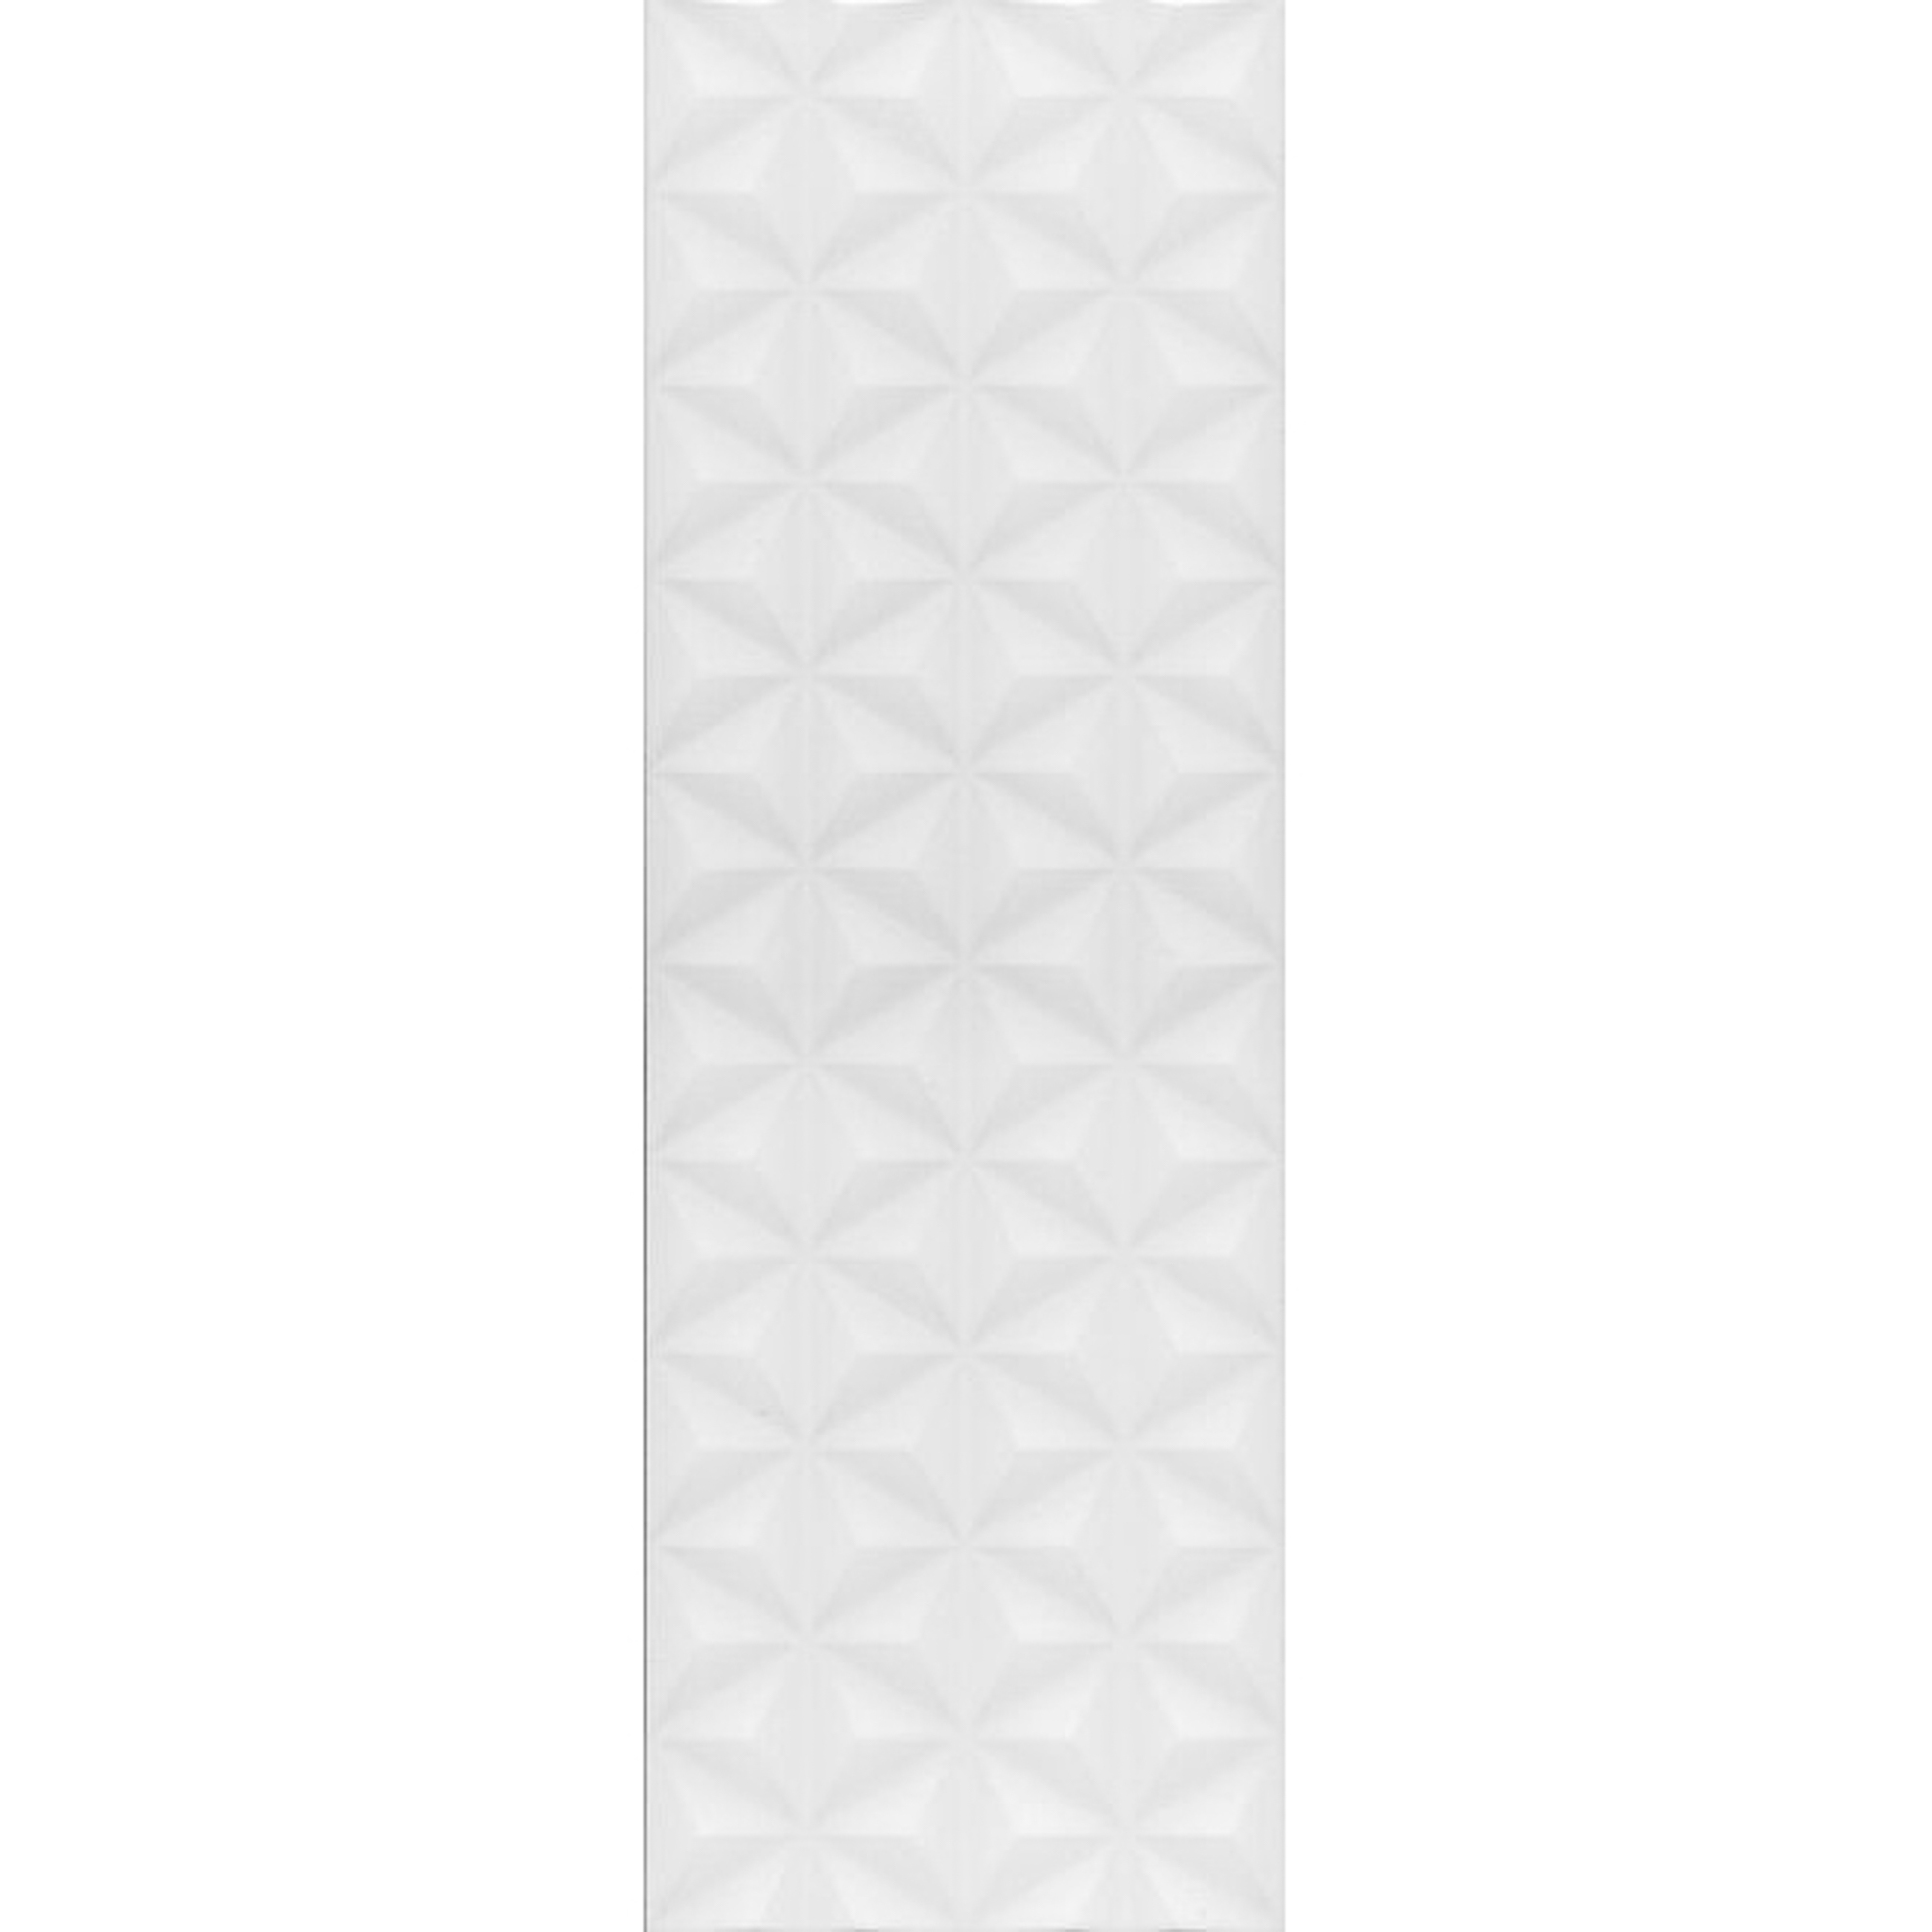 Плитка Kerama Marazzi Диагональ белая структура 25x75 см 12119R плитка kerama marazzi диагональ белая 25x75 см 12125r